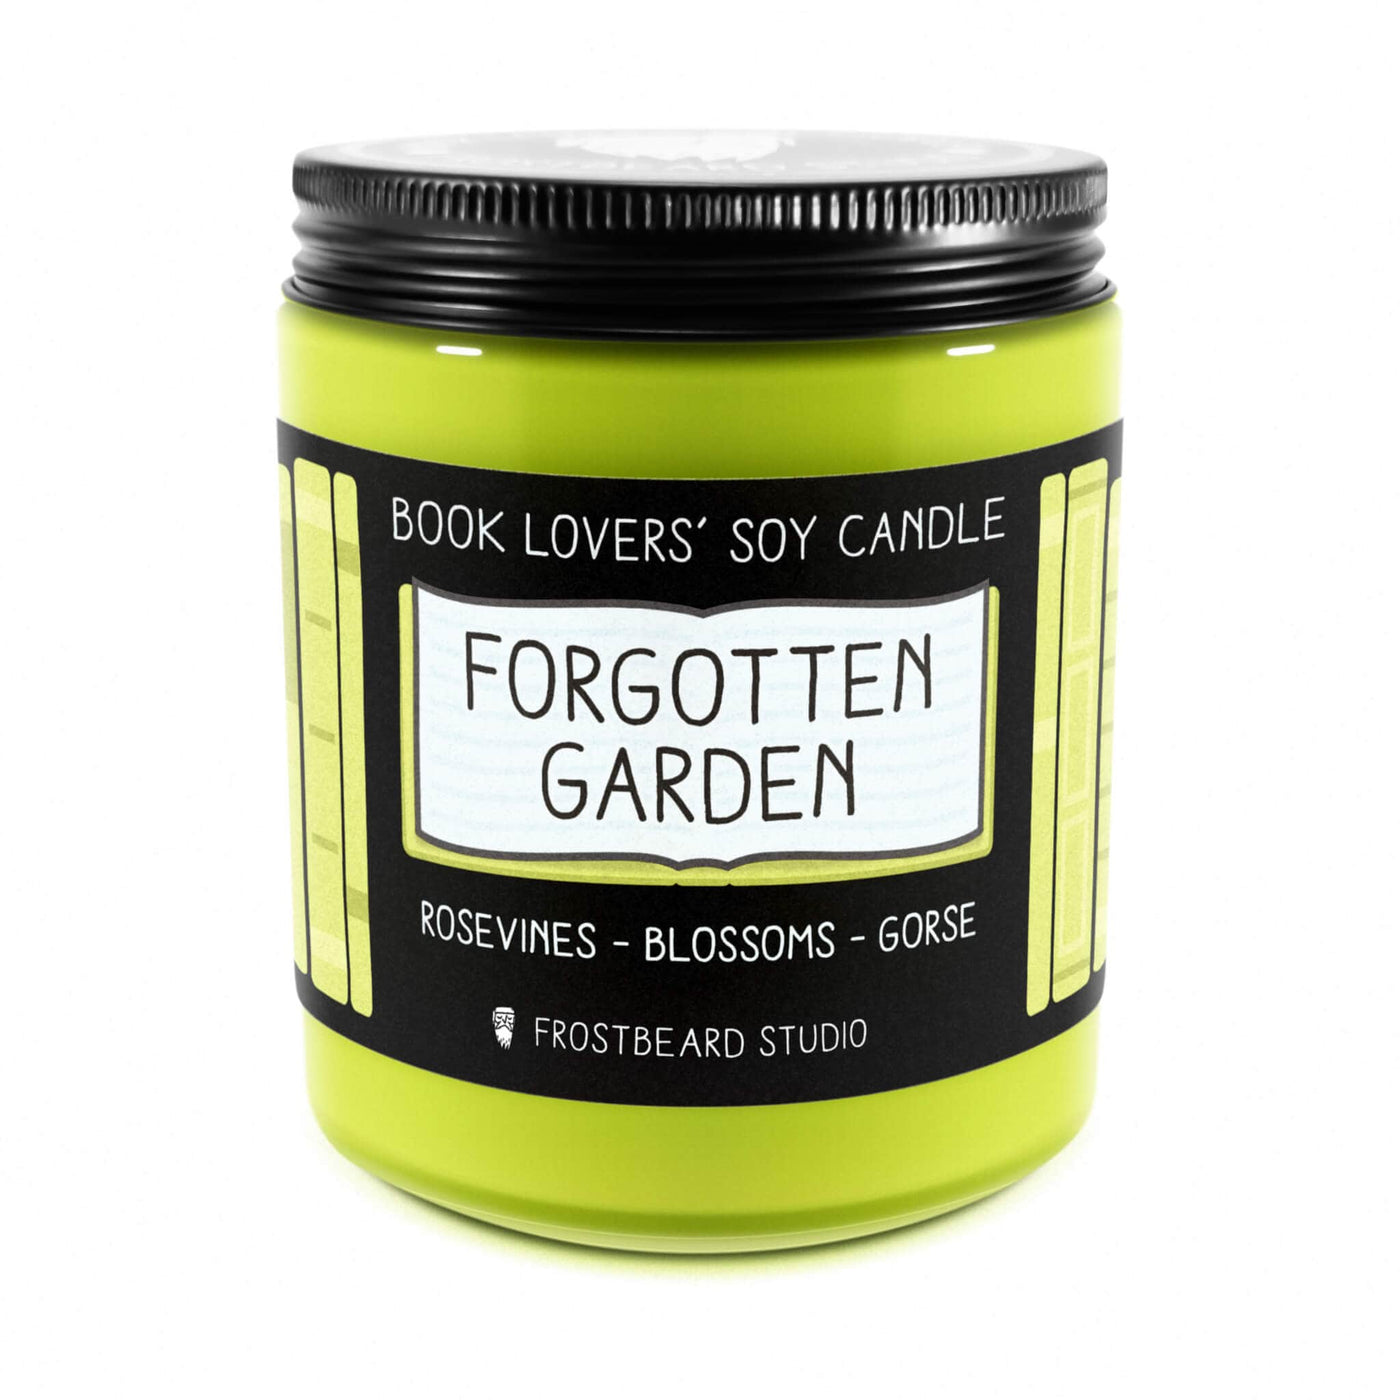 Forgotten Garden  -  8 oz Jar  -  Book Lovers' Soy Candle  -  Frostbeard Studio